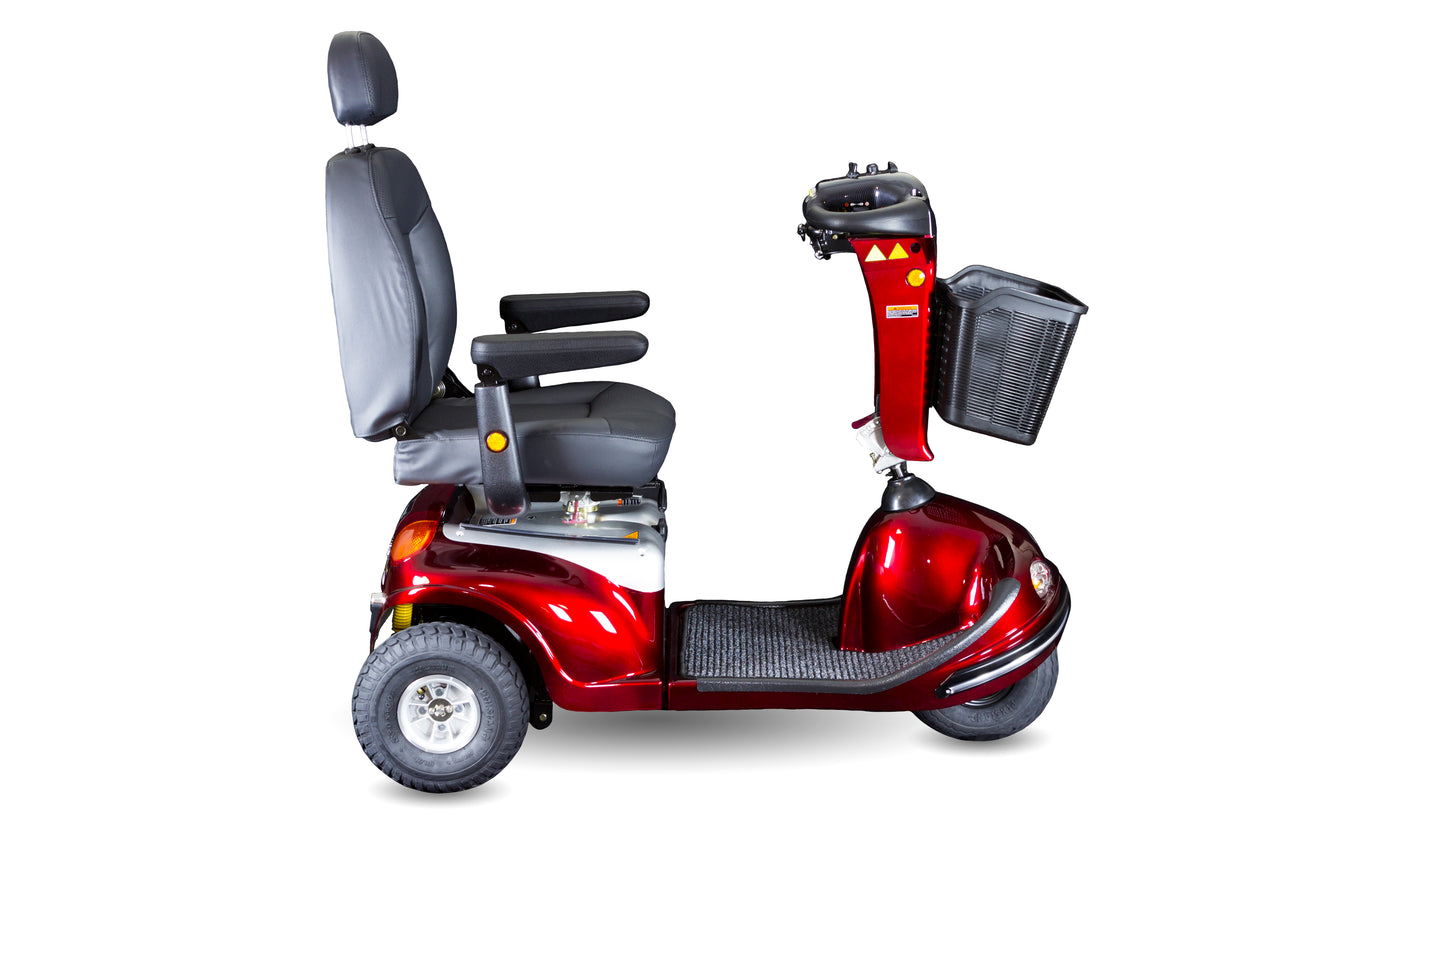 Shoprider Enduro XL3+ Heavy-Duty Mobility Scooter